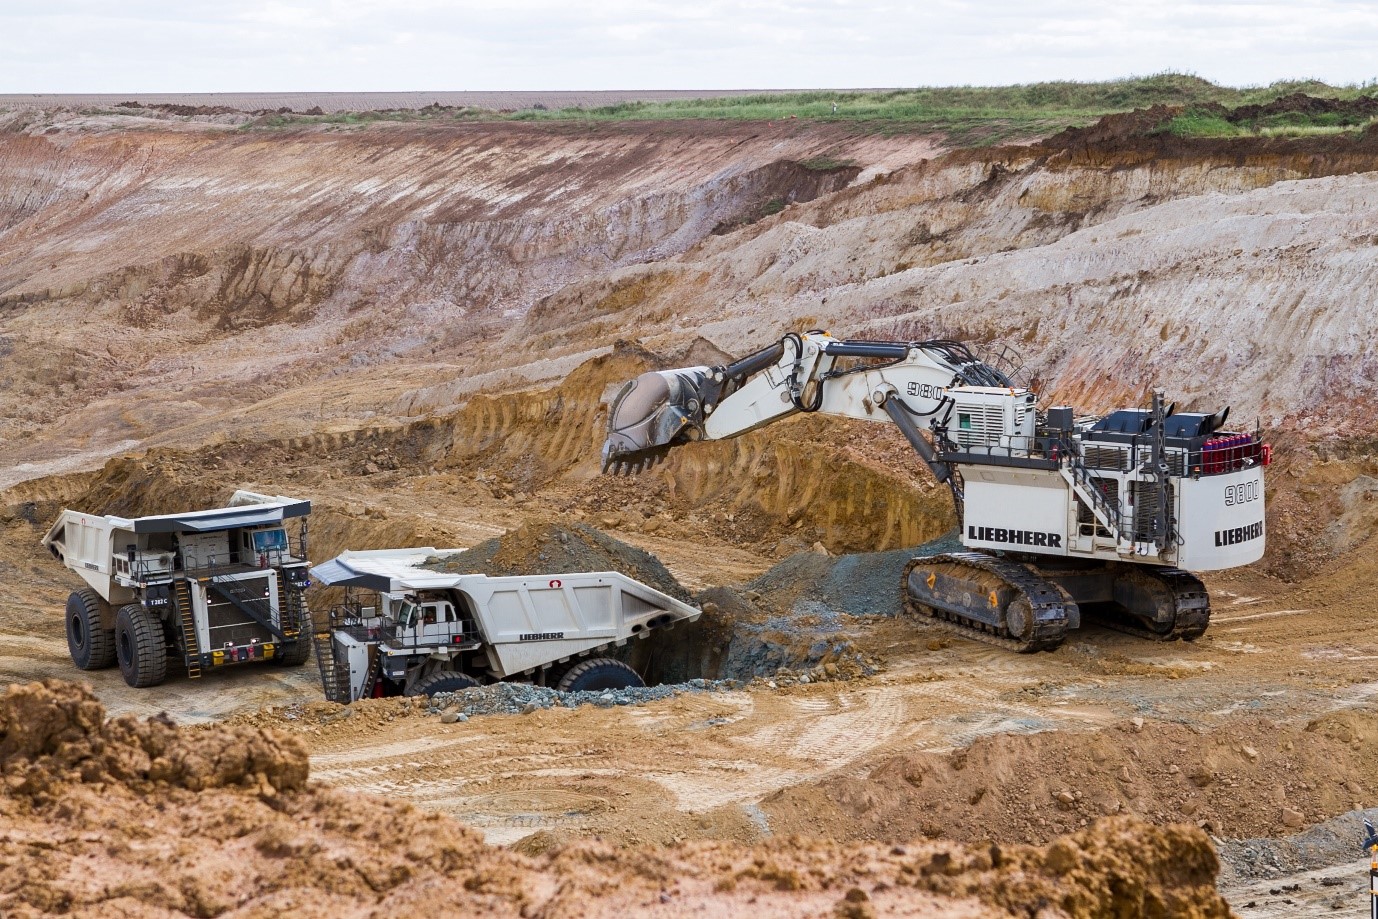 Liebherr R9800 Excavator and dump trucks for mining